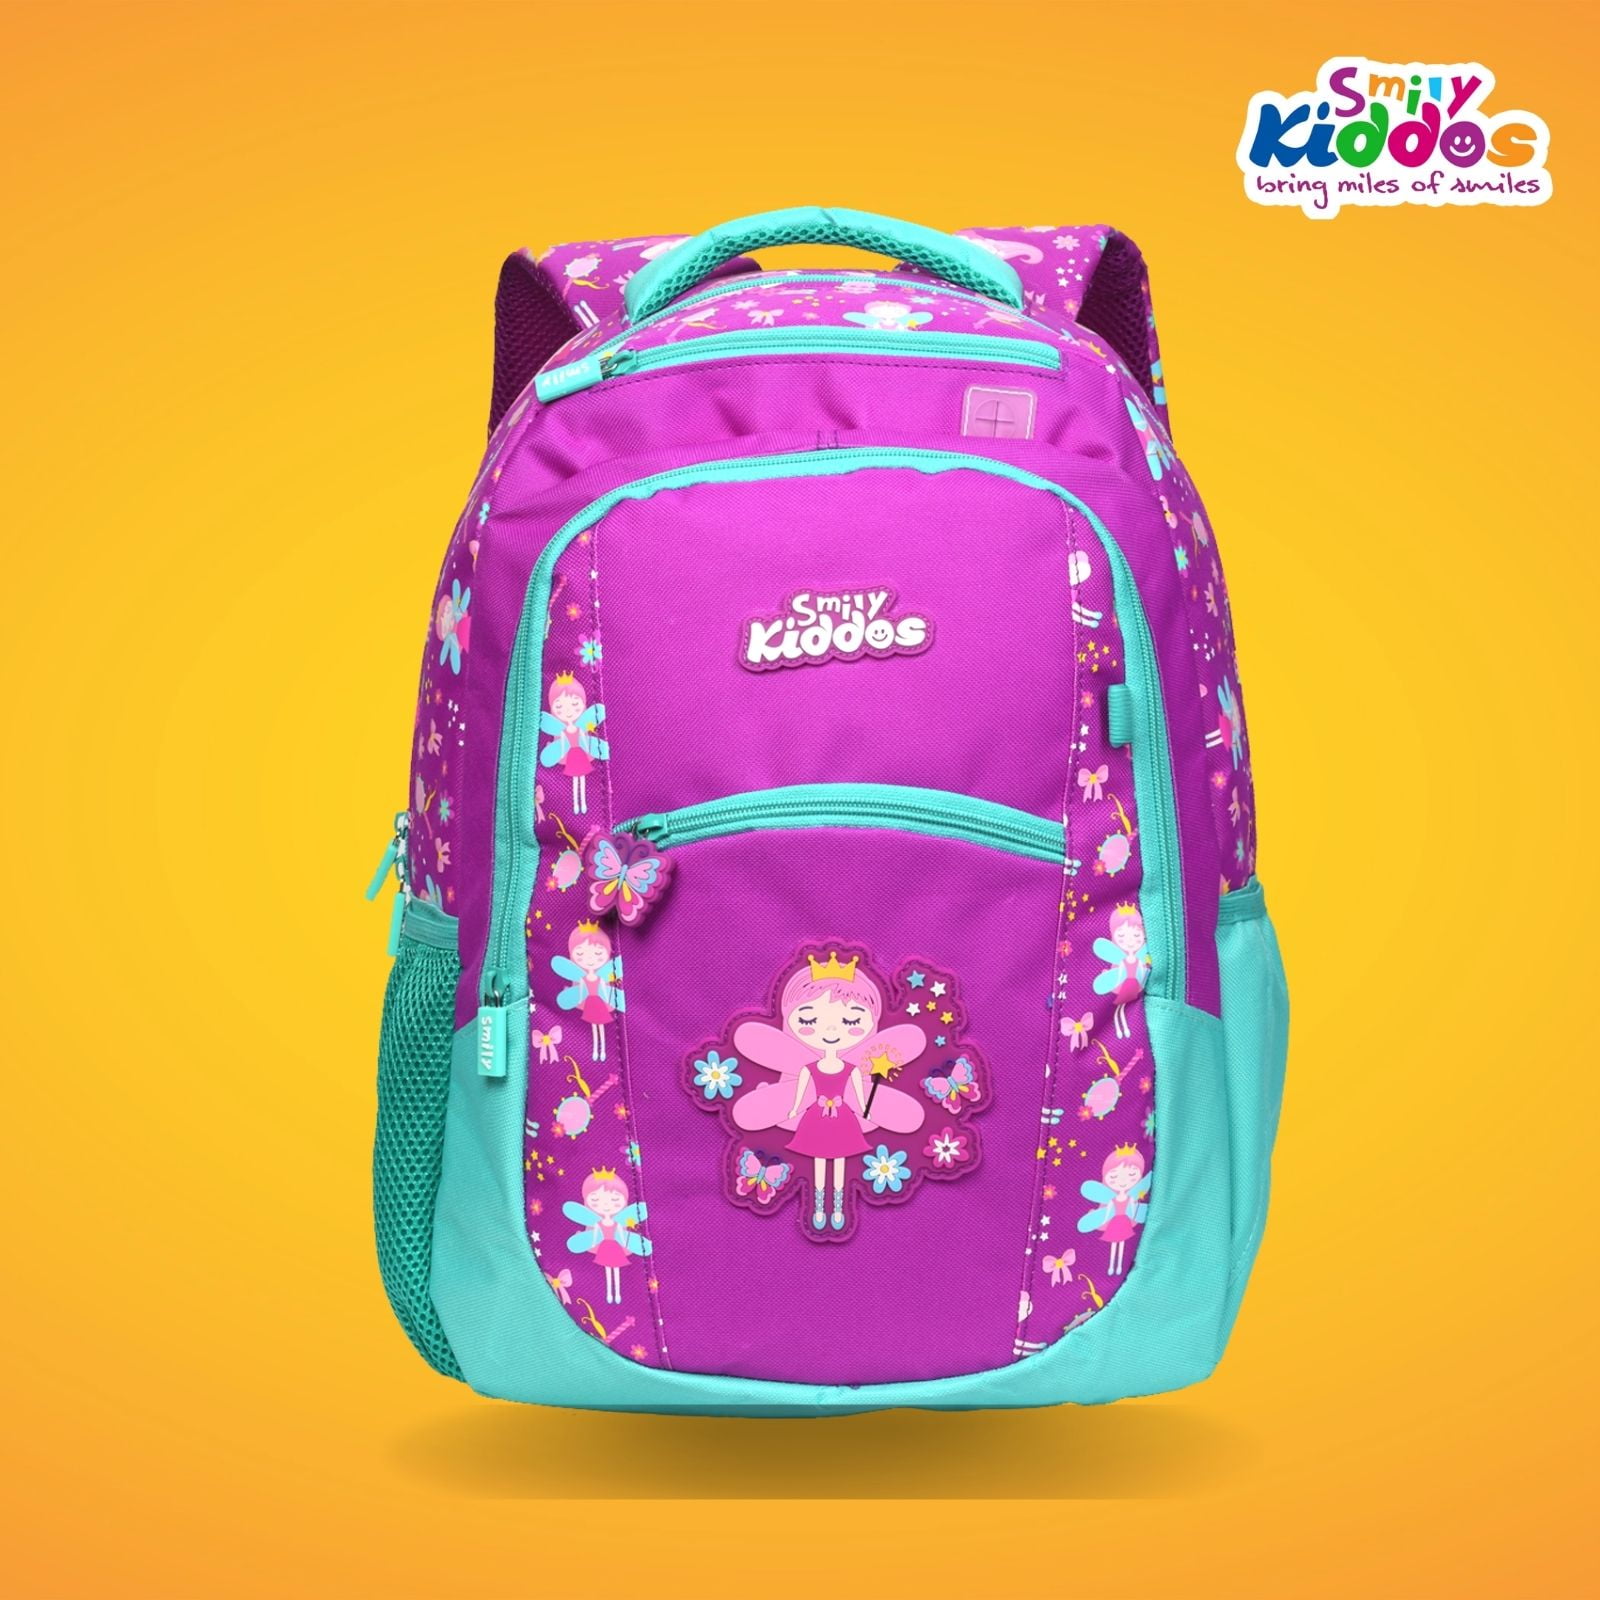 New 16" Shopkins Girls Pink Cute School Bag Backpack Rucksack Travel bag scbag90 